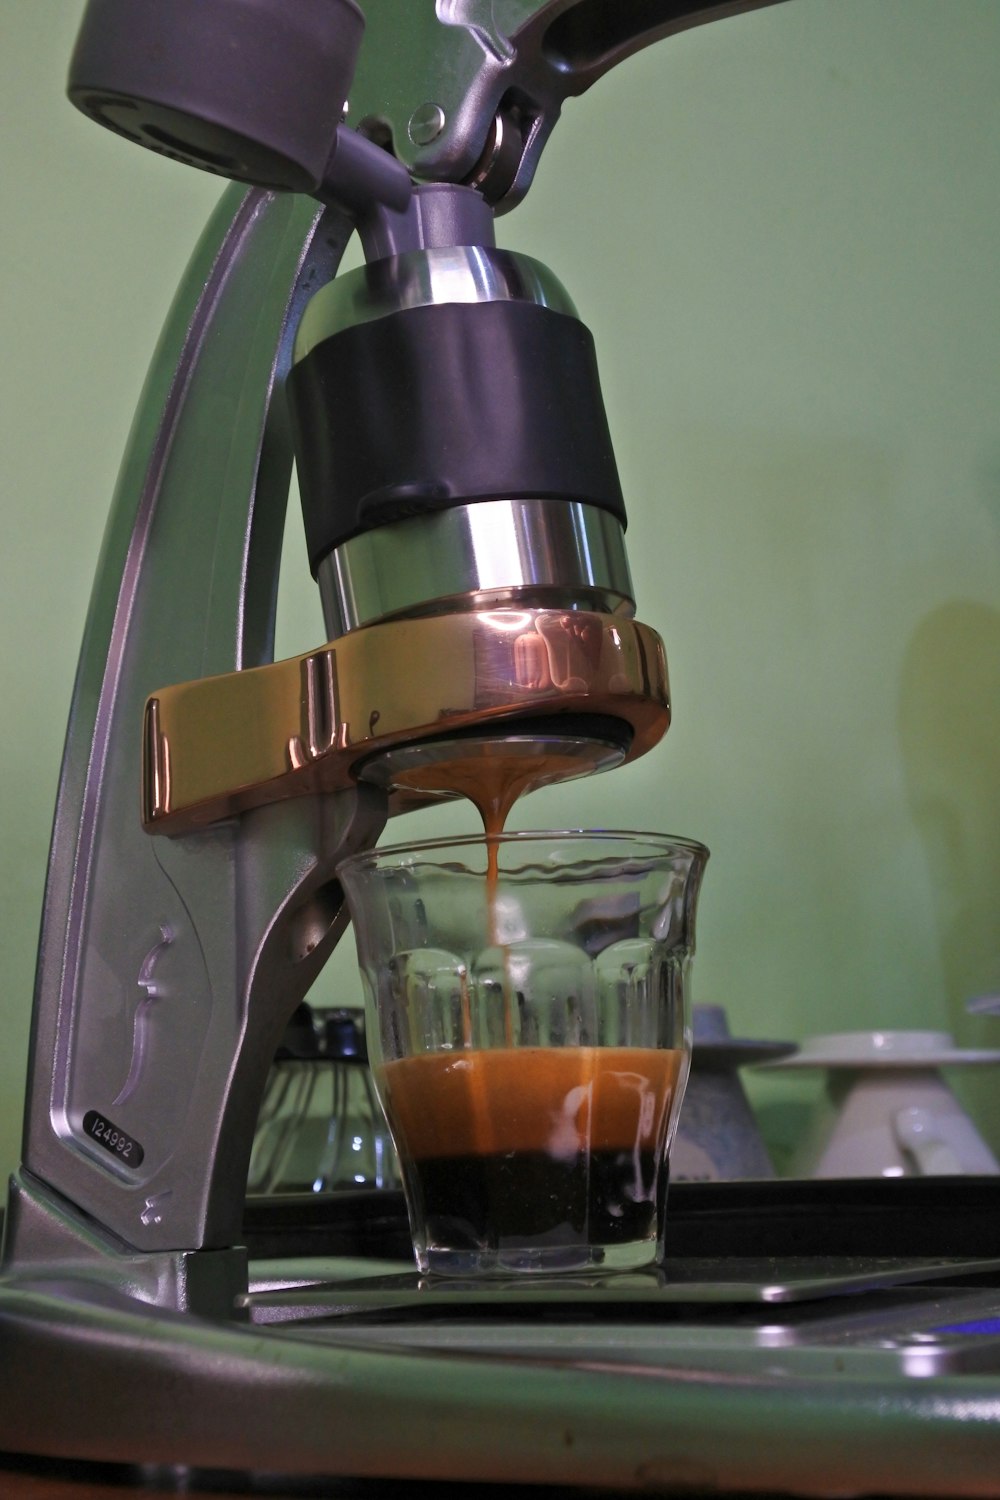 an espresso machine pouring coffee into a glass